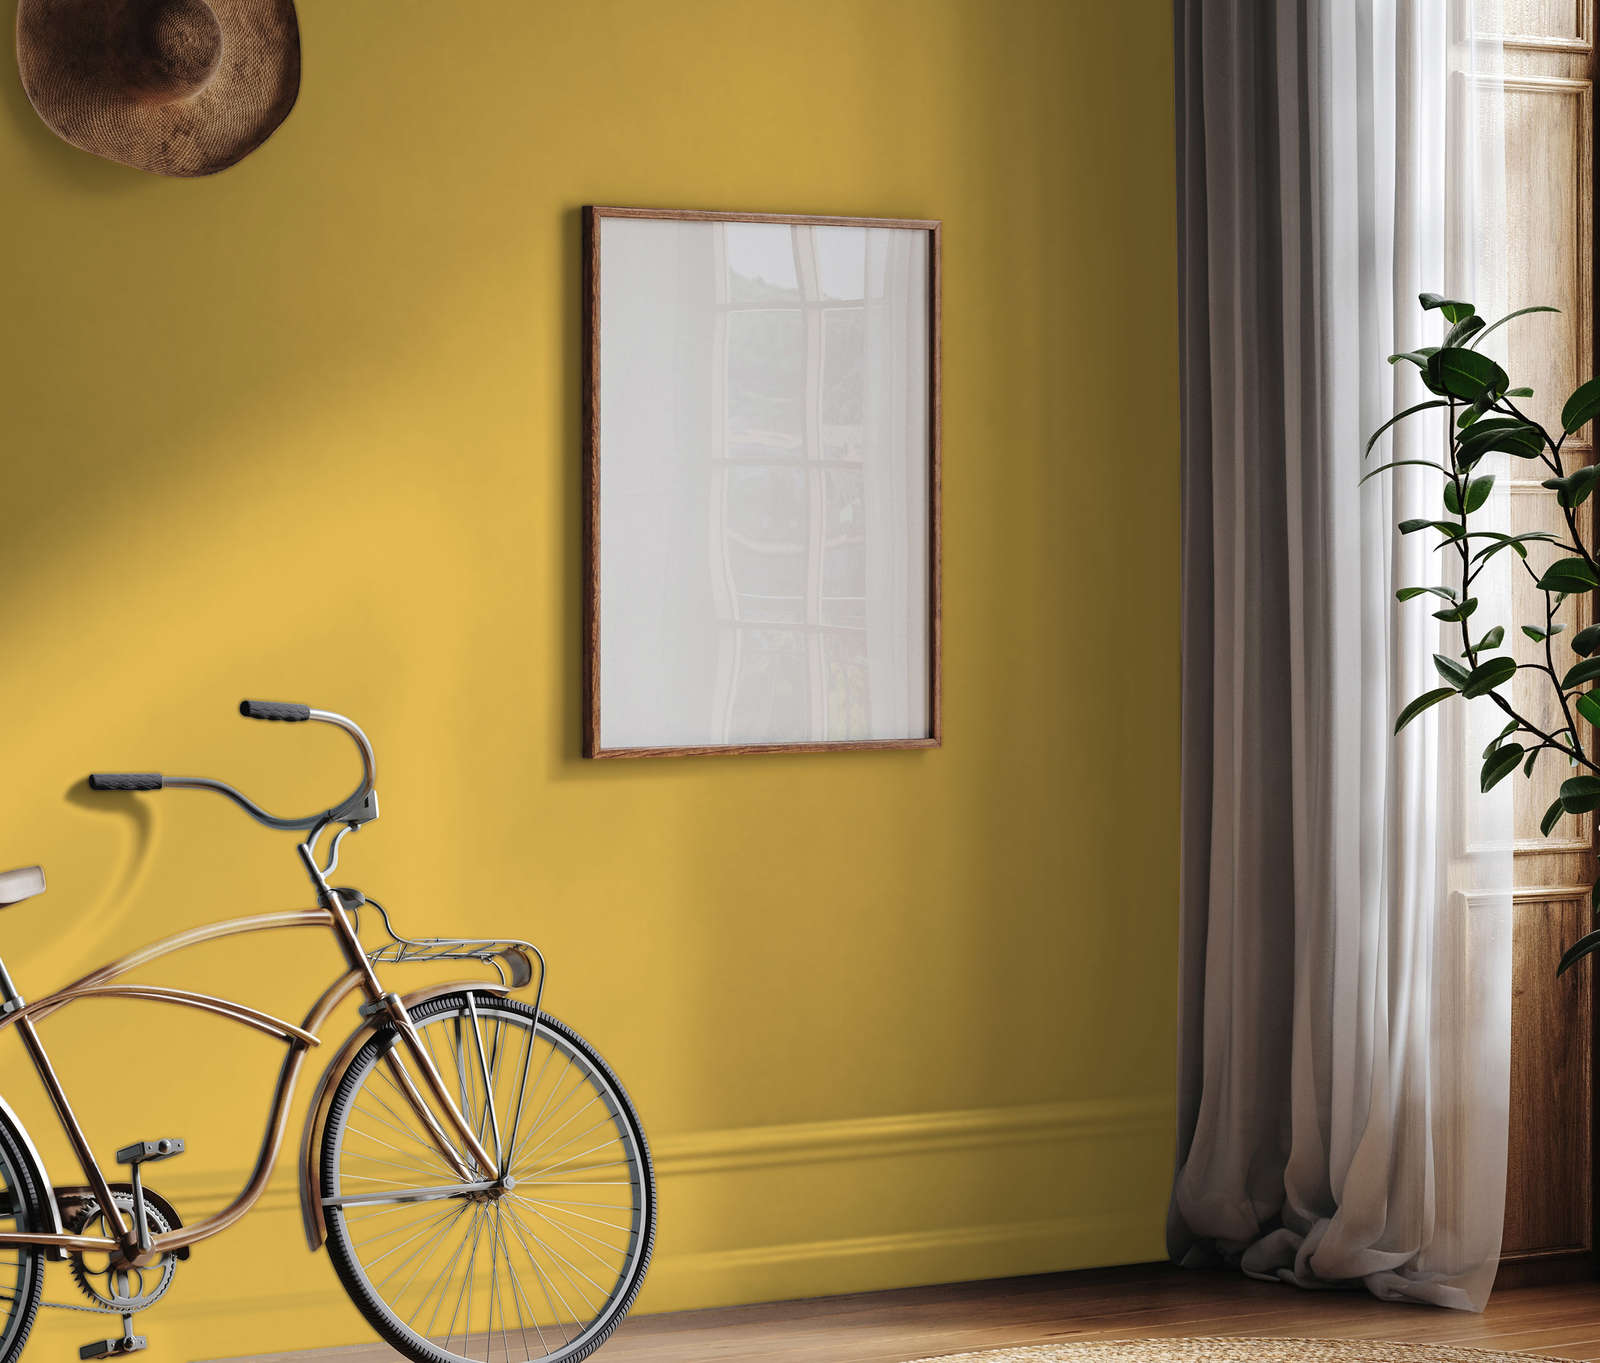             Premium Wall Paint Active Vanilla »Juicy Yellow« NW803 – 2.5 litre
        